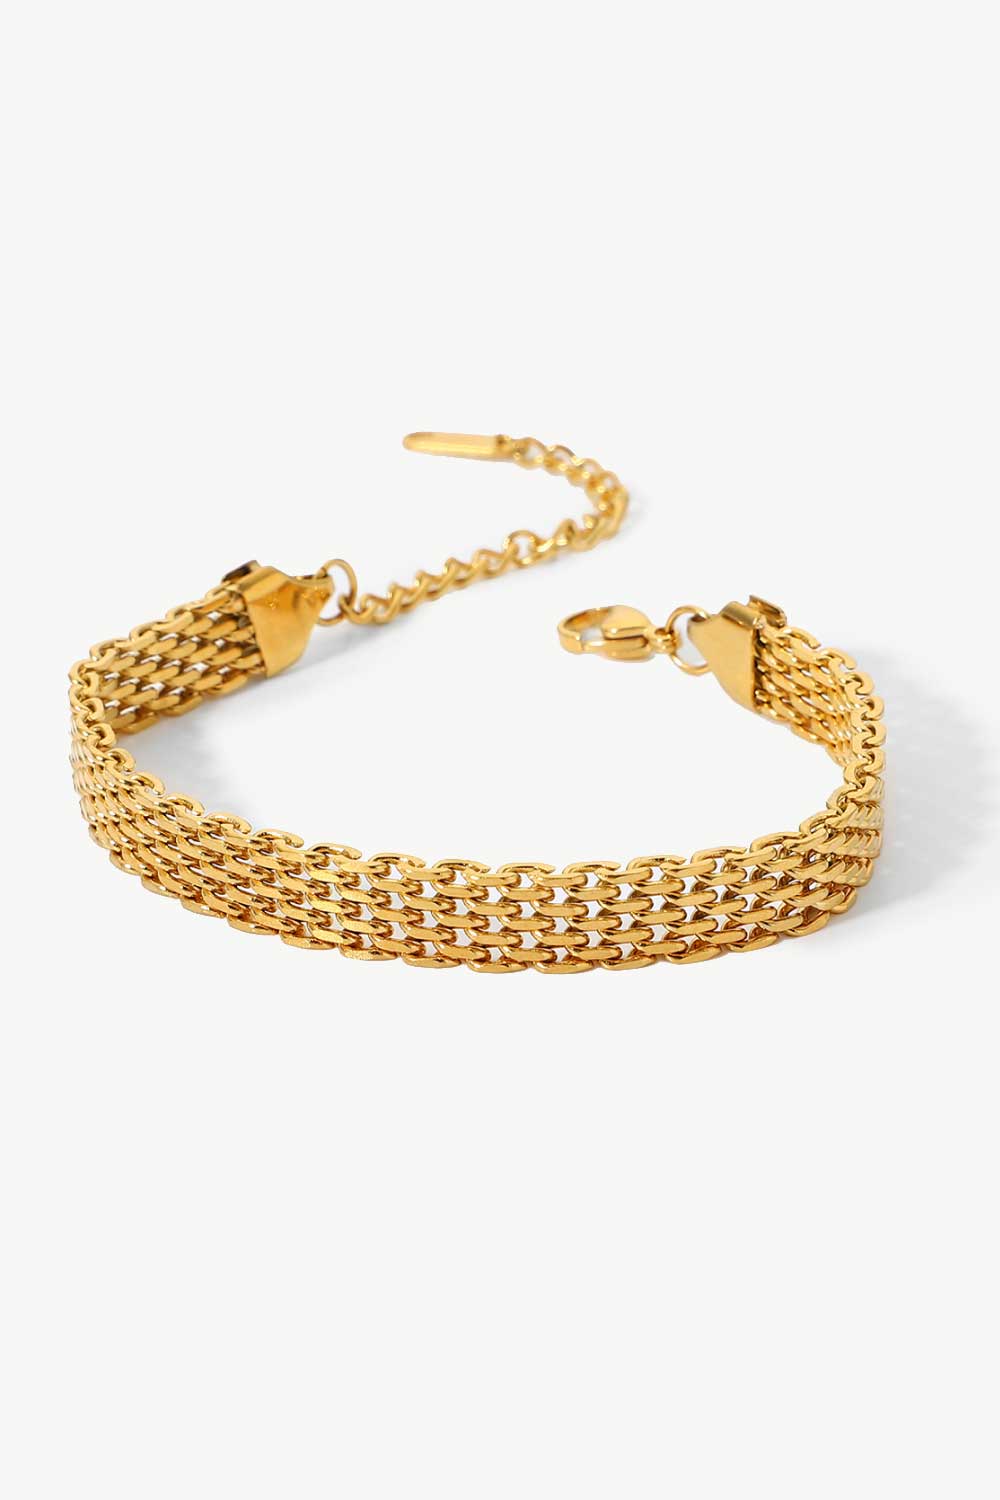 18K Gold-Plated Wide Chain Bracelet - Gold / One Size - Women’s Jewelry - Bracelets - 1 - 2024